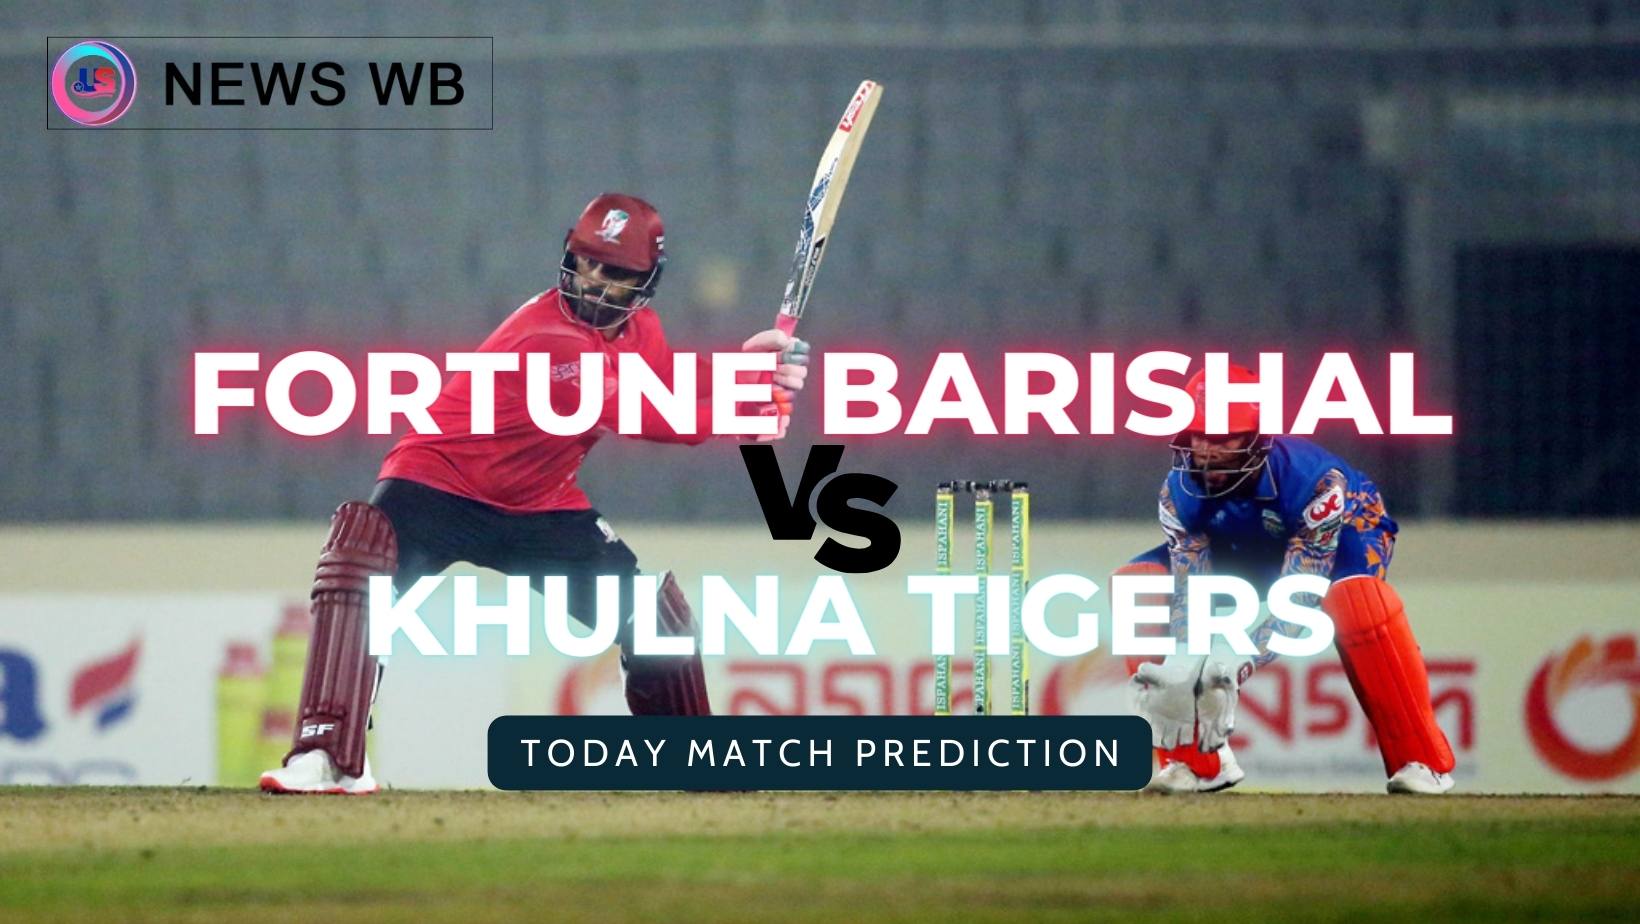 Today Match Prediction: FB vs KLT Dream11 Team, Fortune Barishal vs Khulna Tigers 19th Match, Who Will Win?